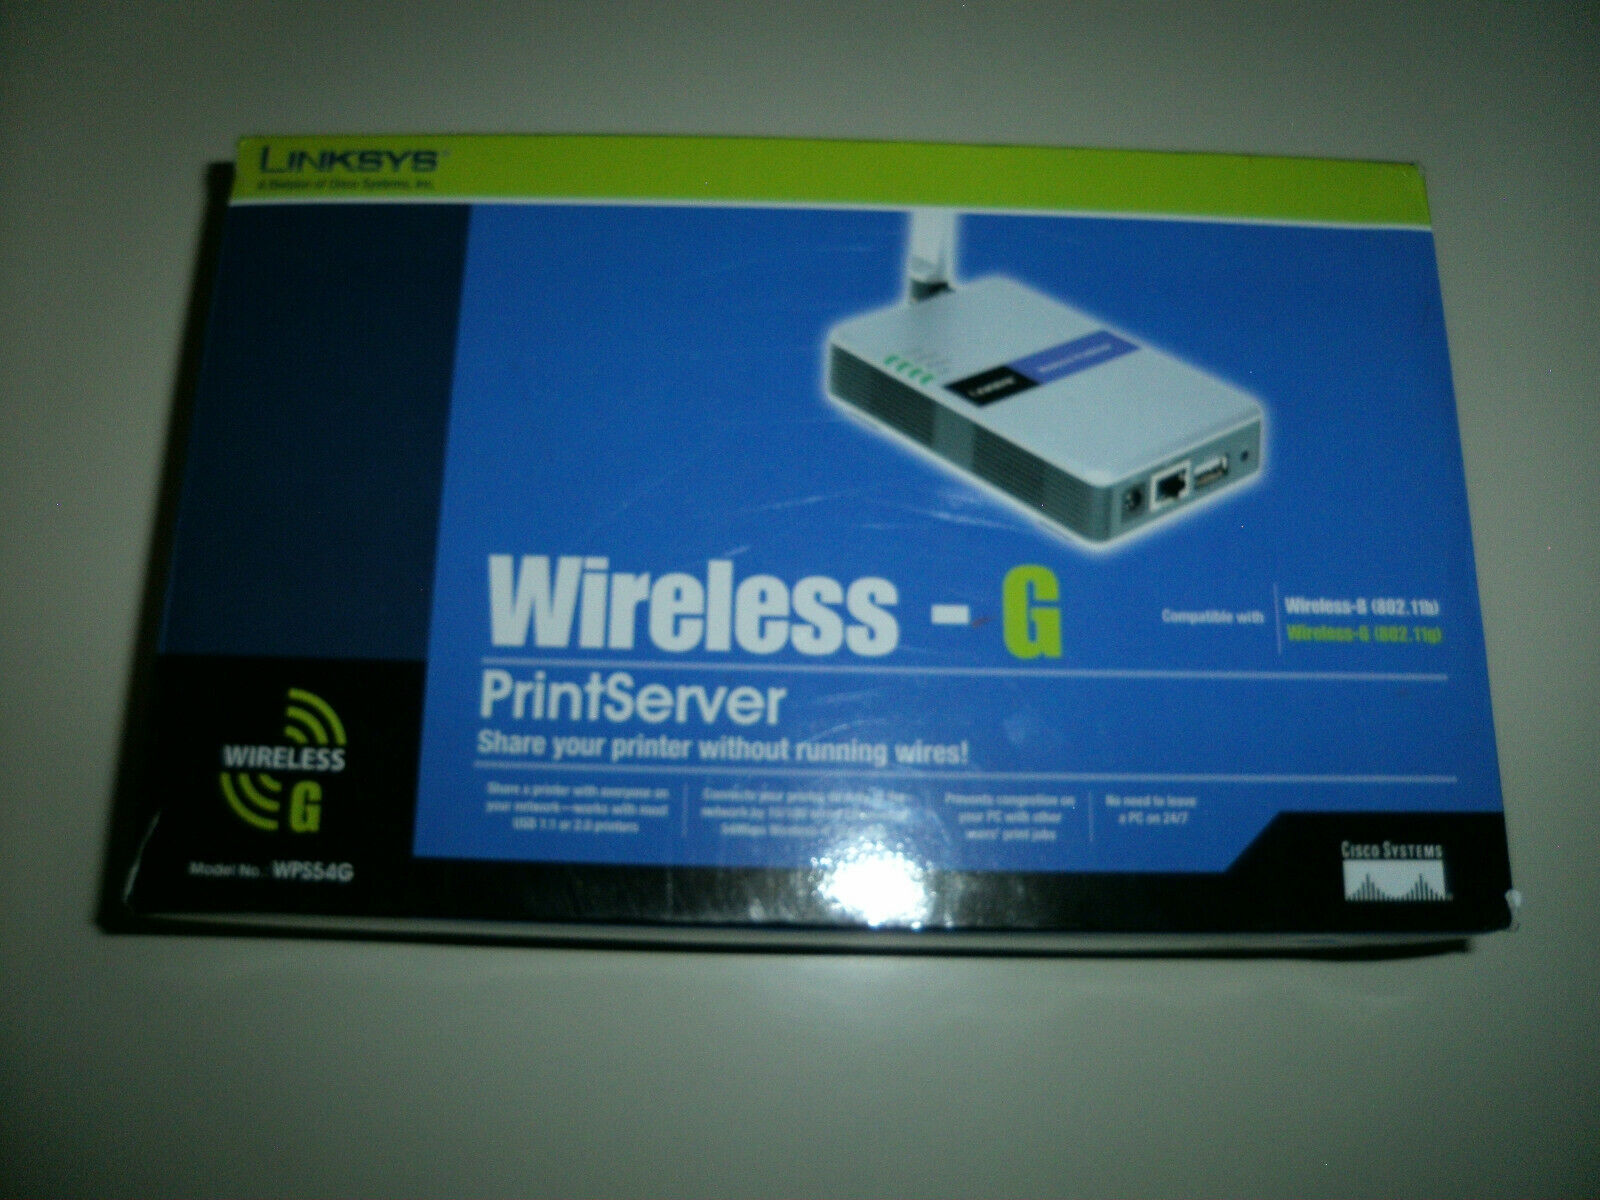 Cisco-Linksys WPS54G Wireless-G 2.4 Ghz 802.11g Print Server 